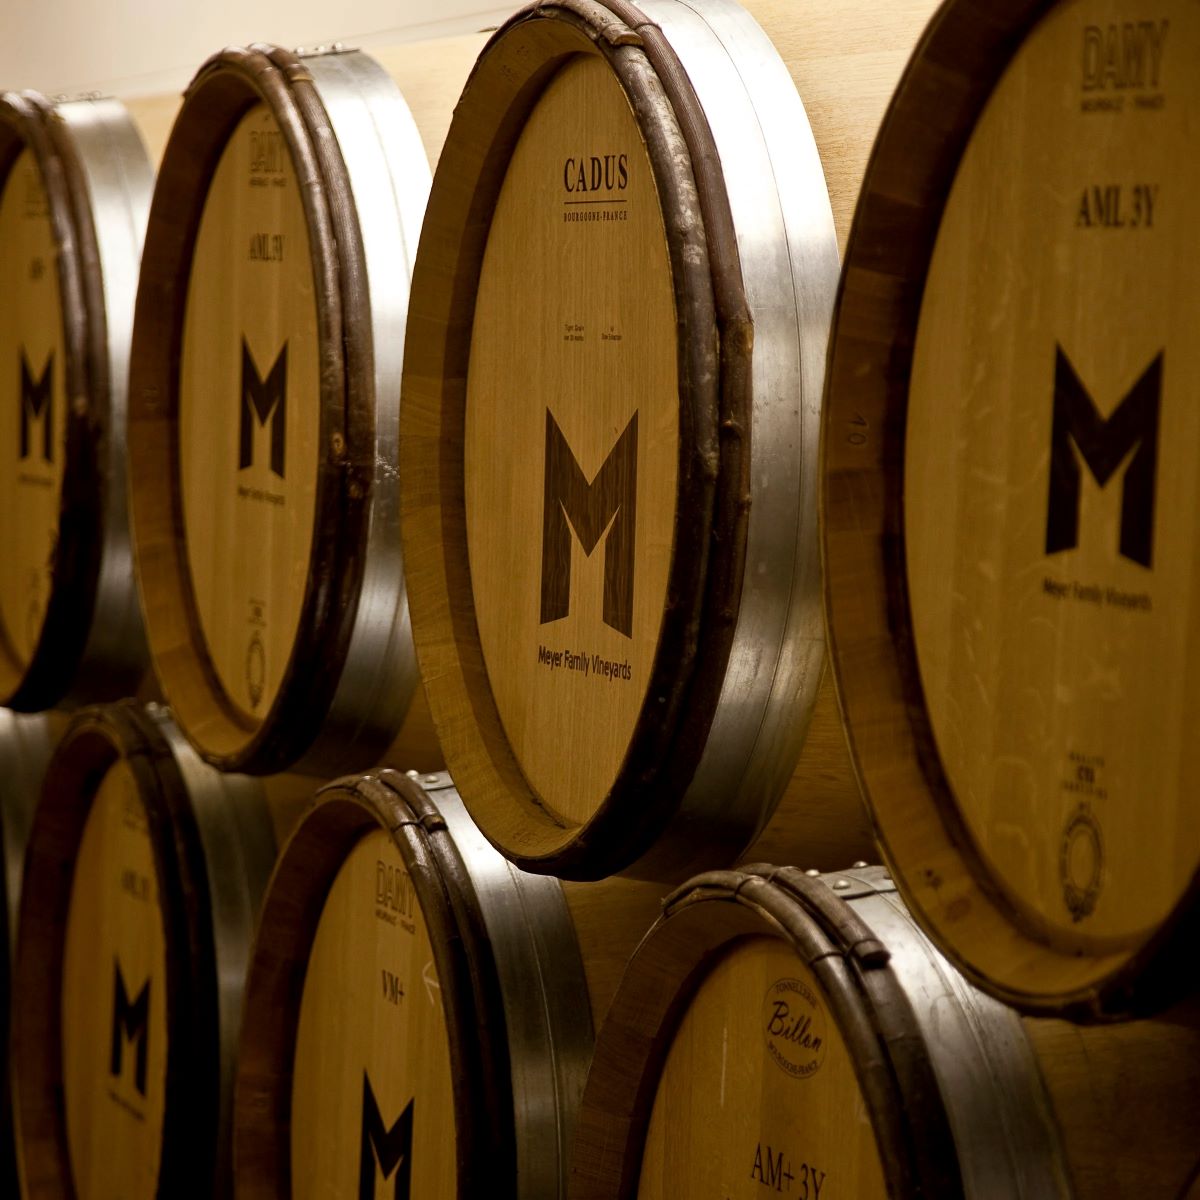 Meyer Family Vineyards barrels in the cellar